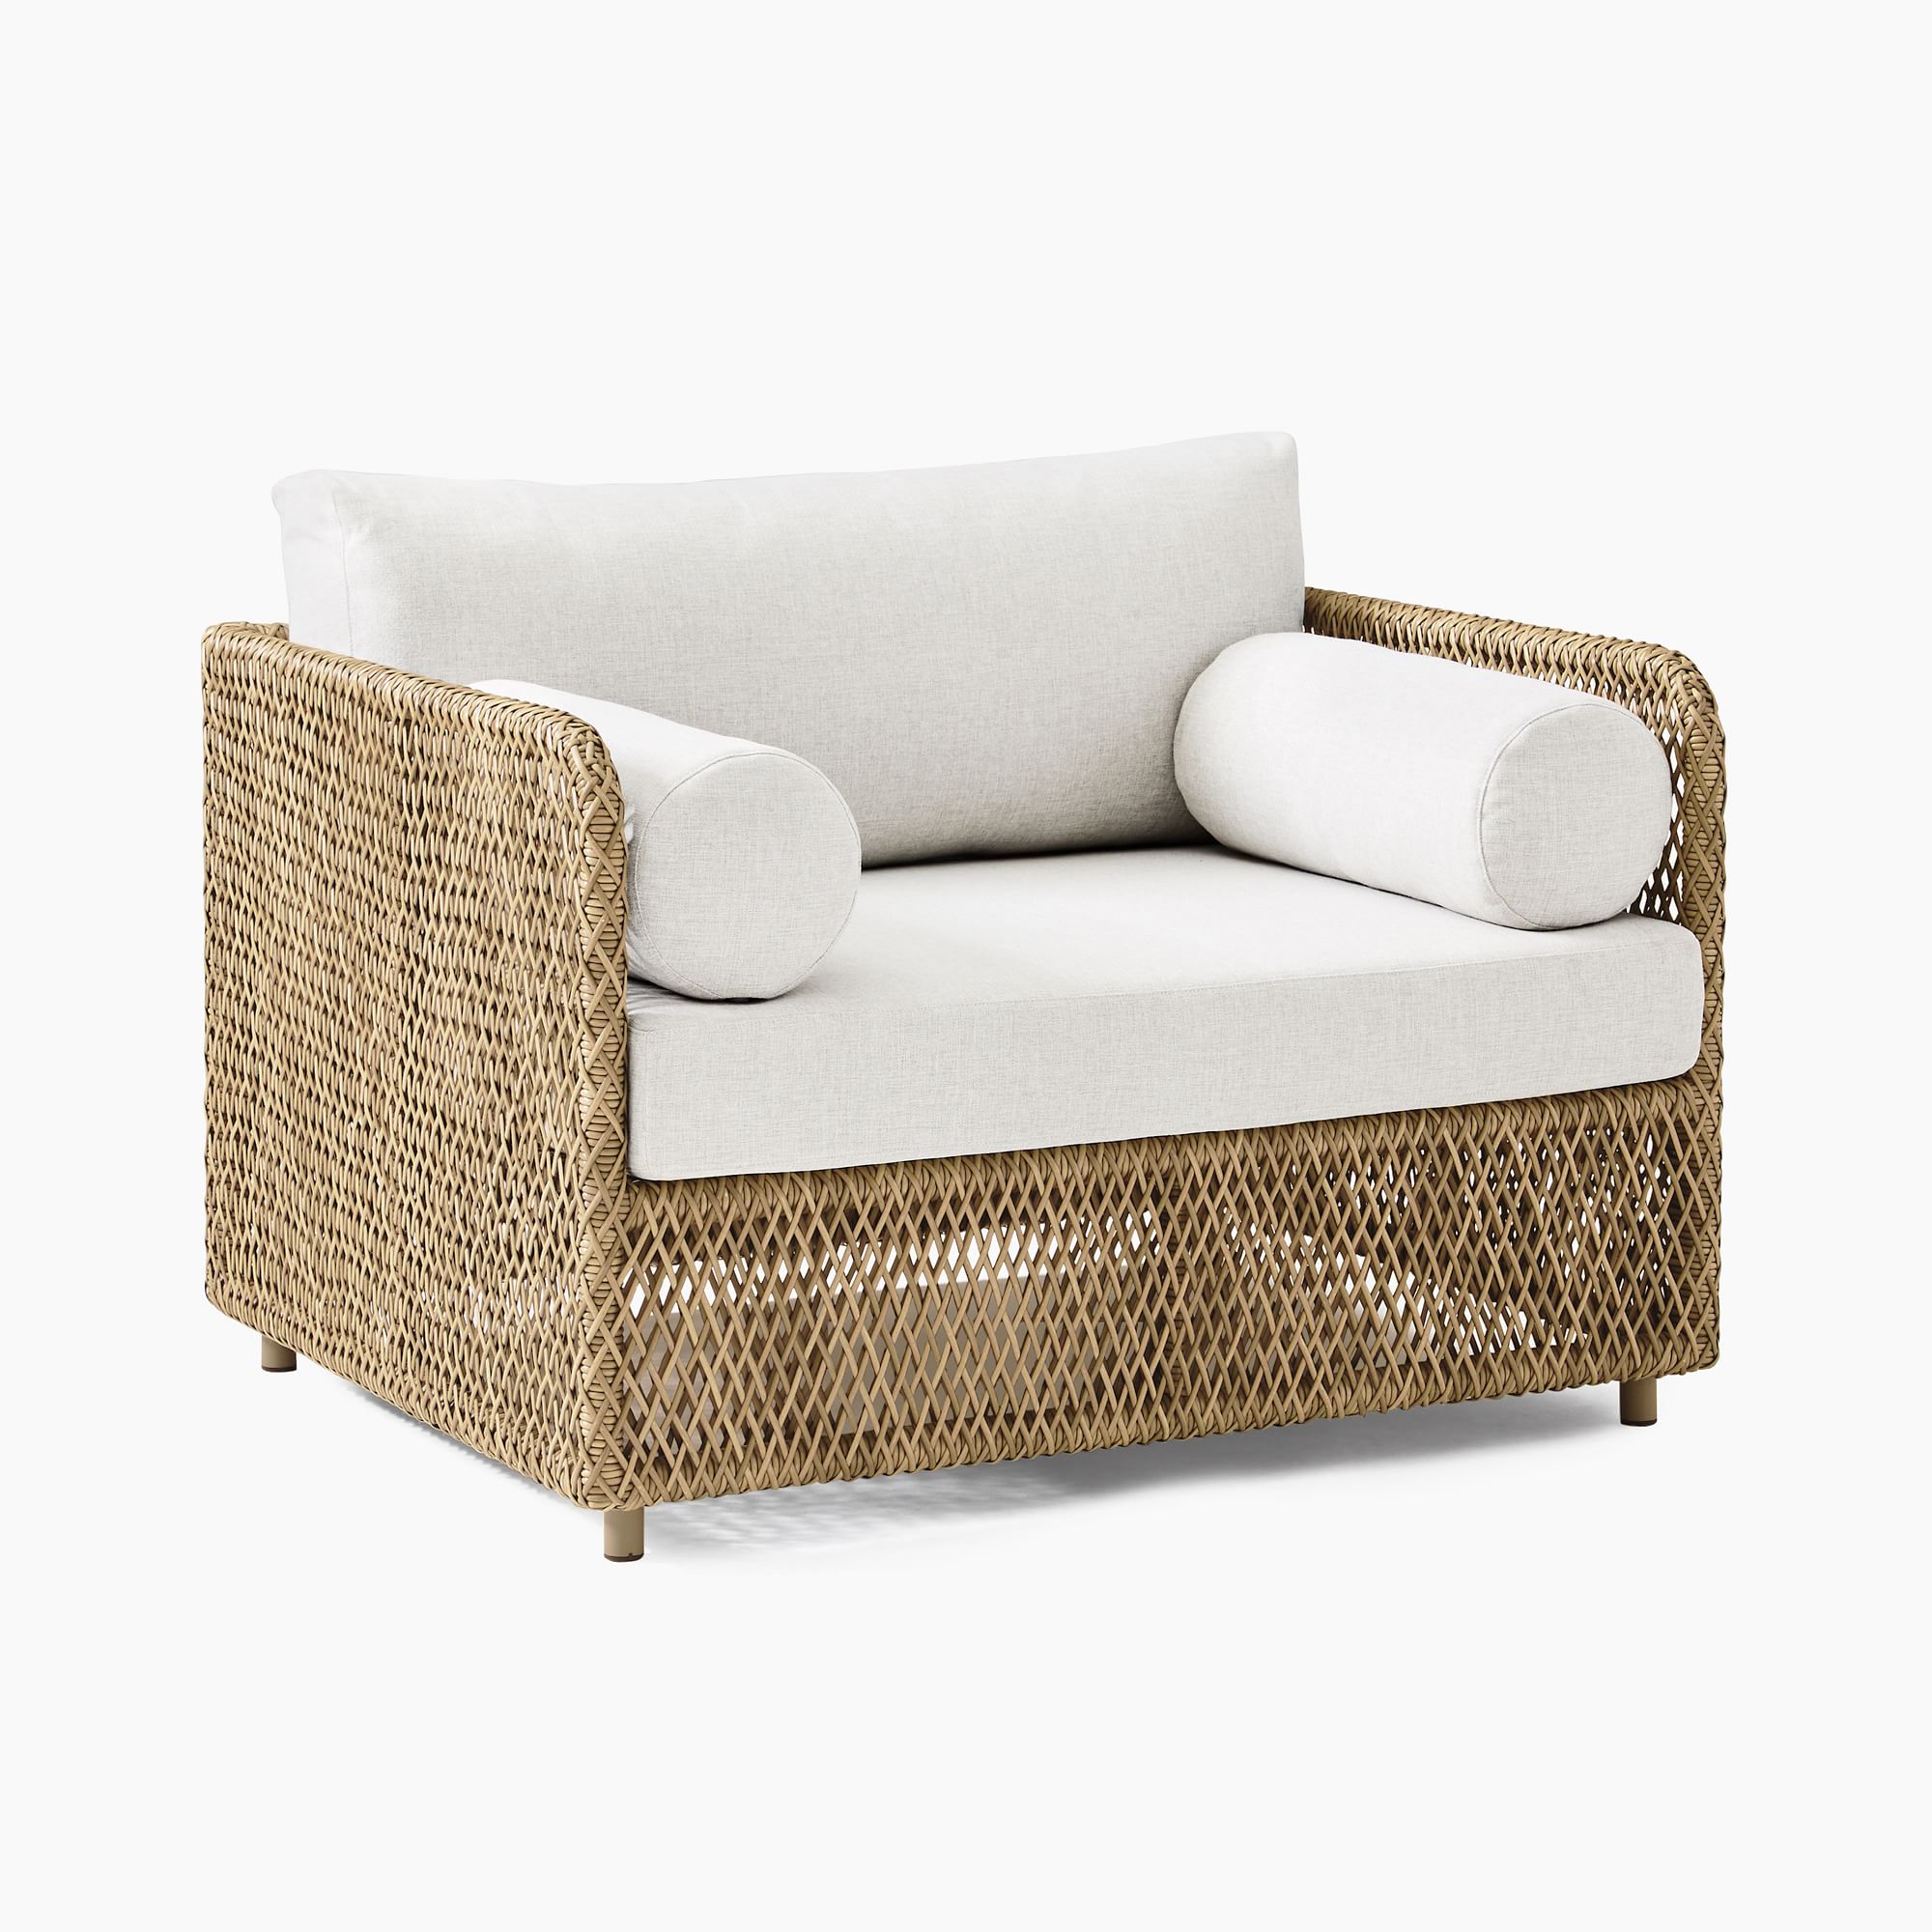 Coastal Outdoor Lounge Chair | West Elm